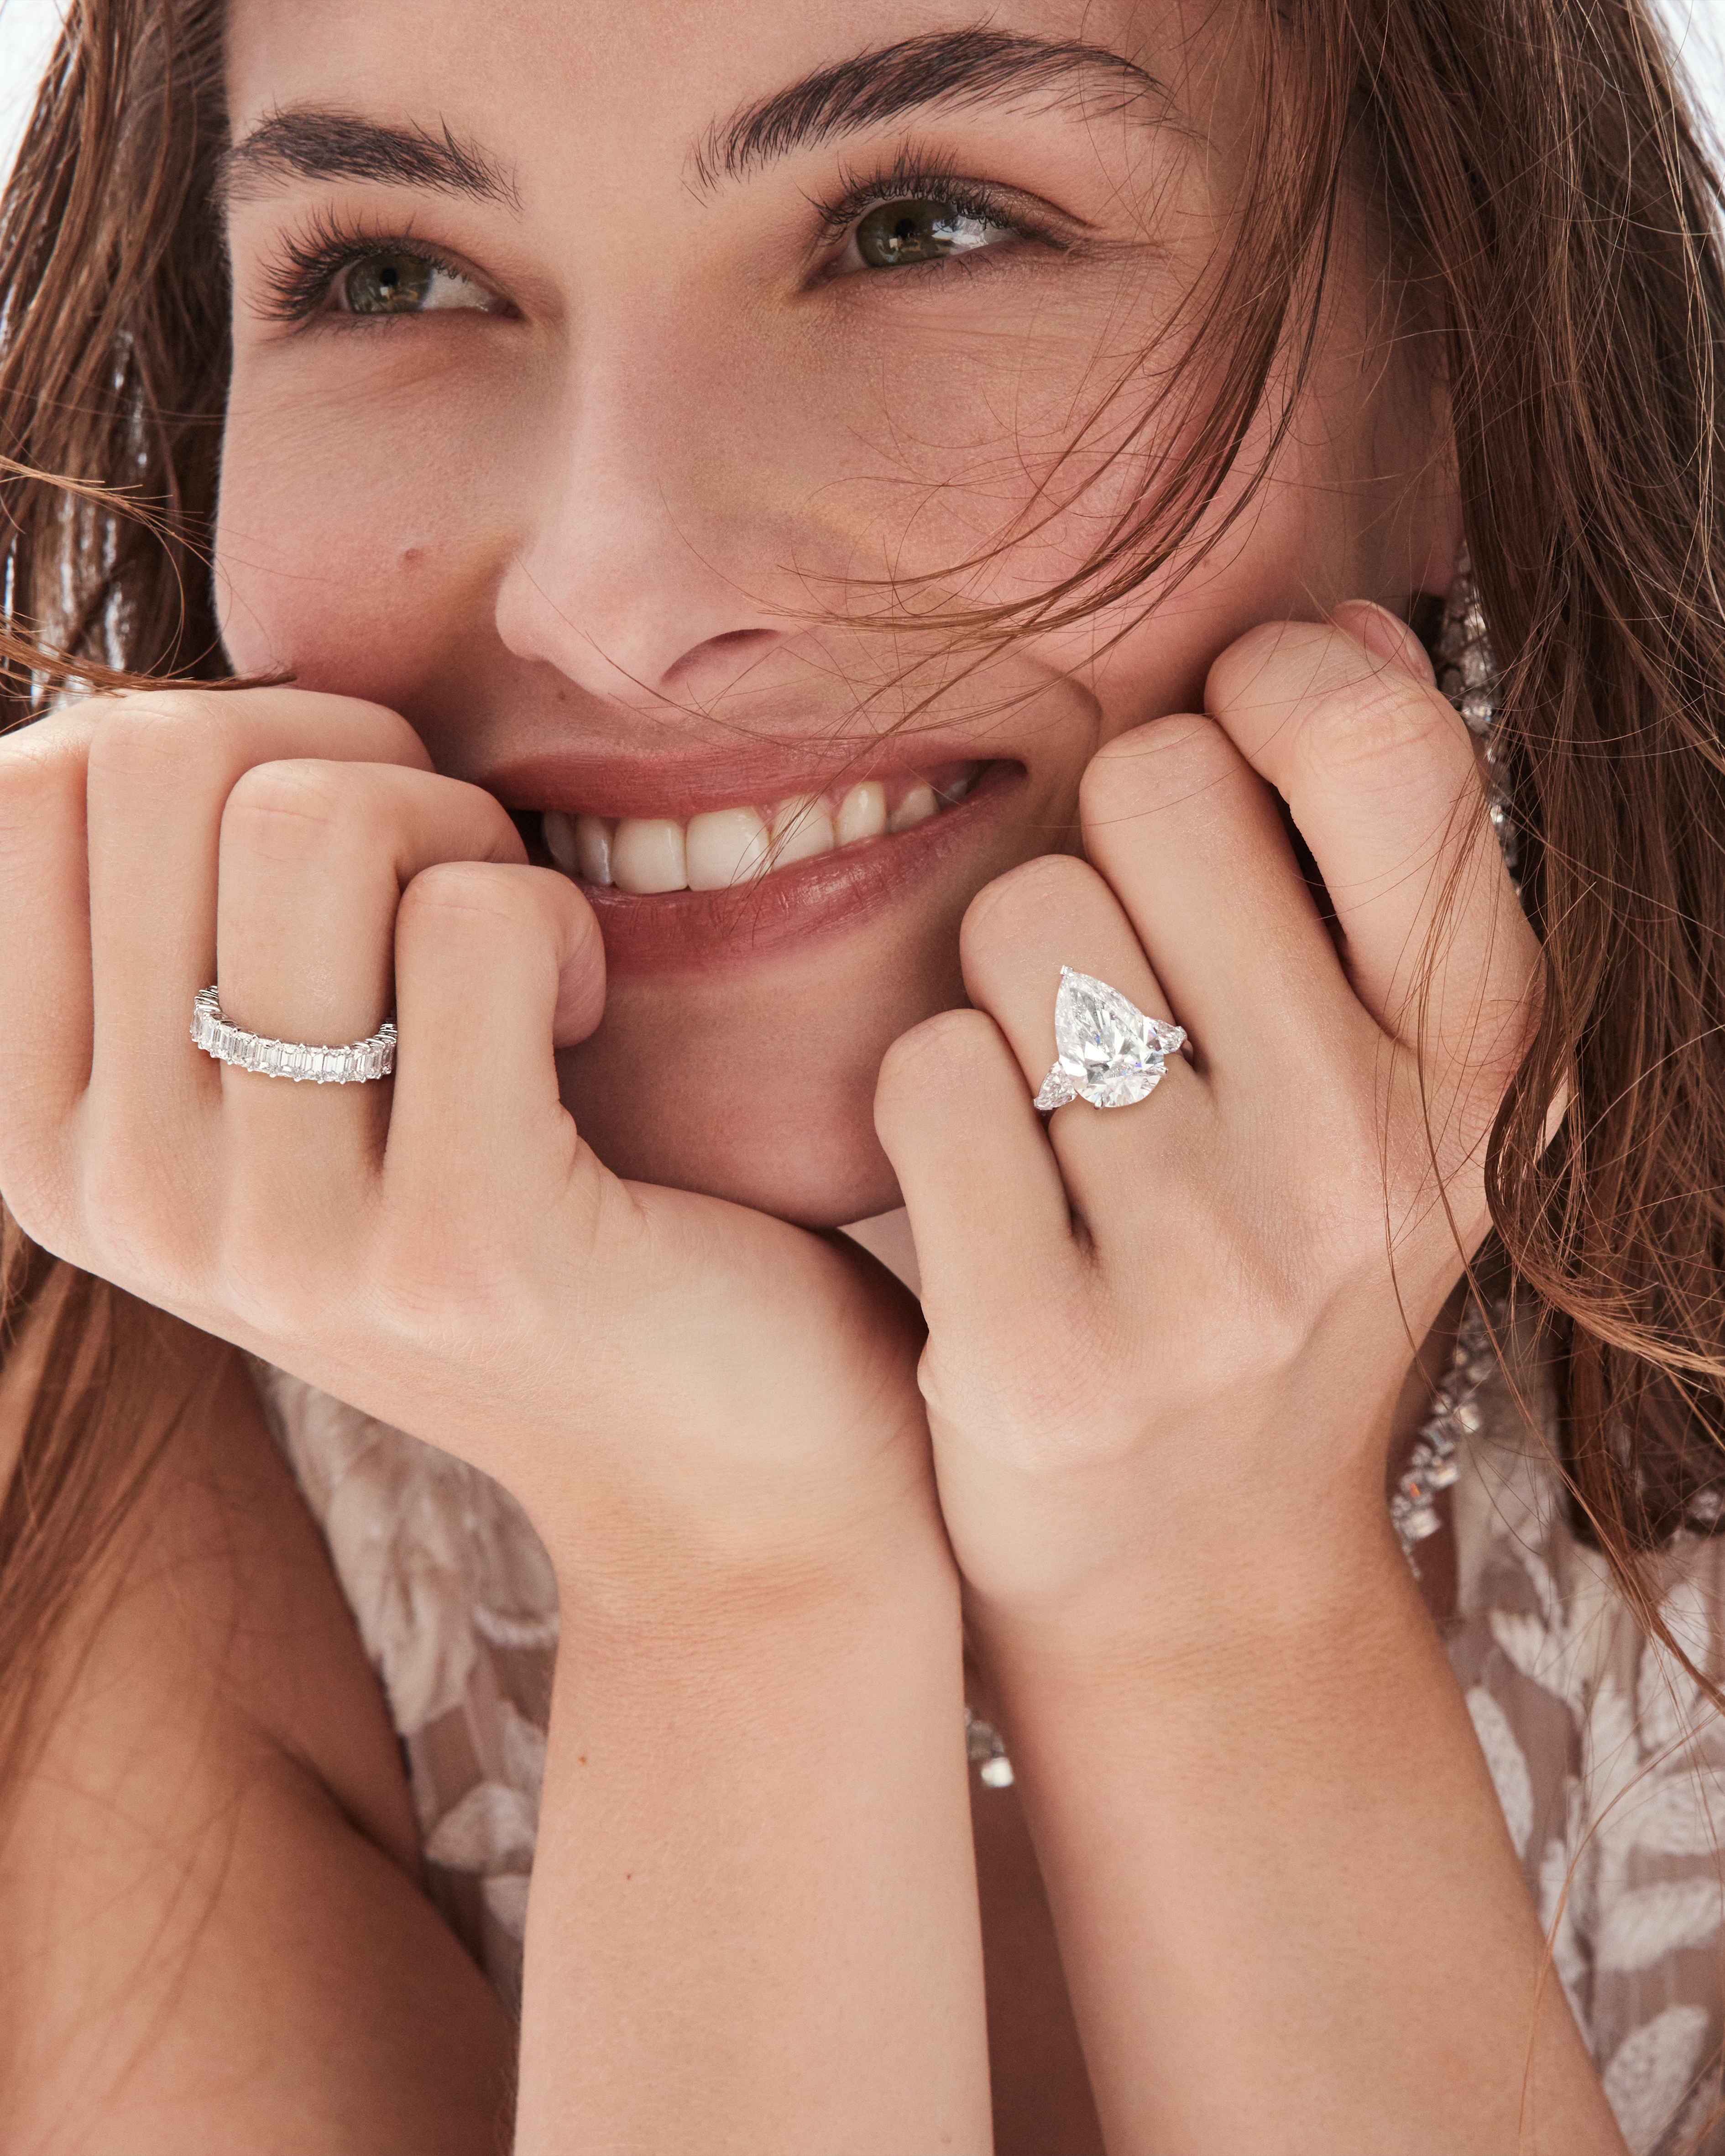 Pear-Shaped Diamond Engagement Rings